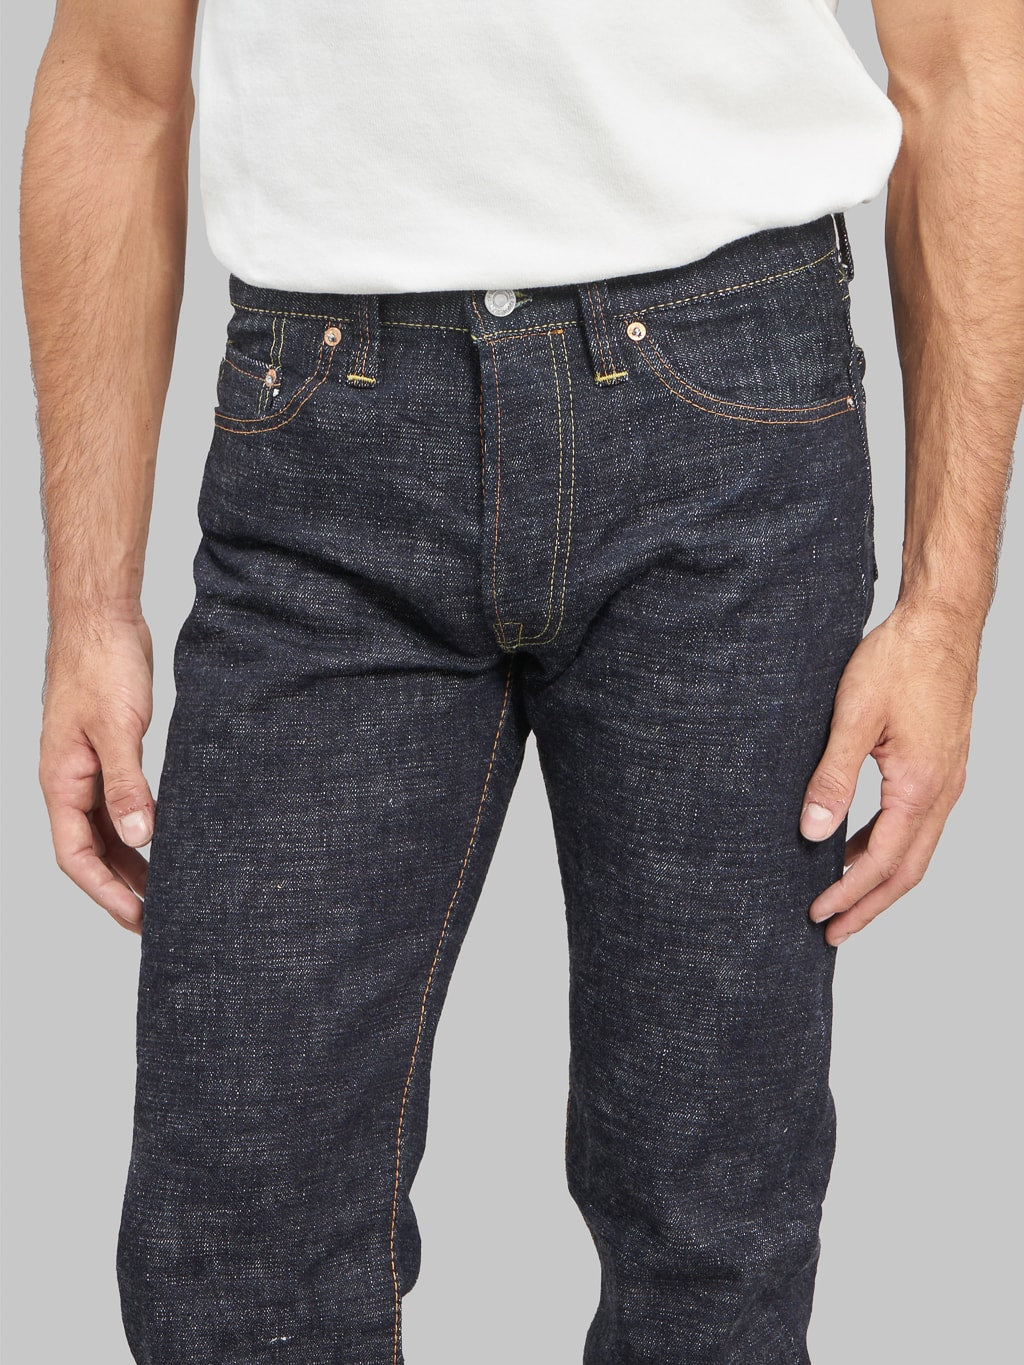 the strike gold 7104 ultra slubby straight tapered jeans  waist